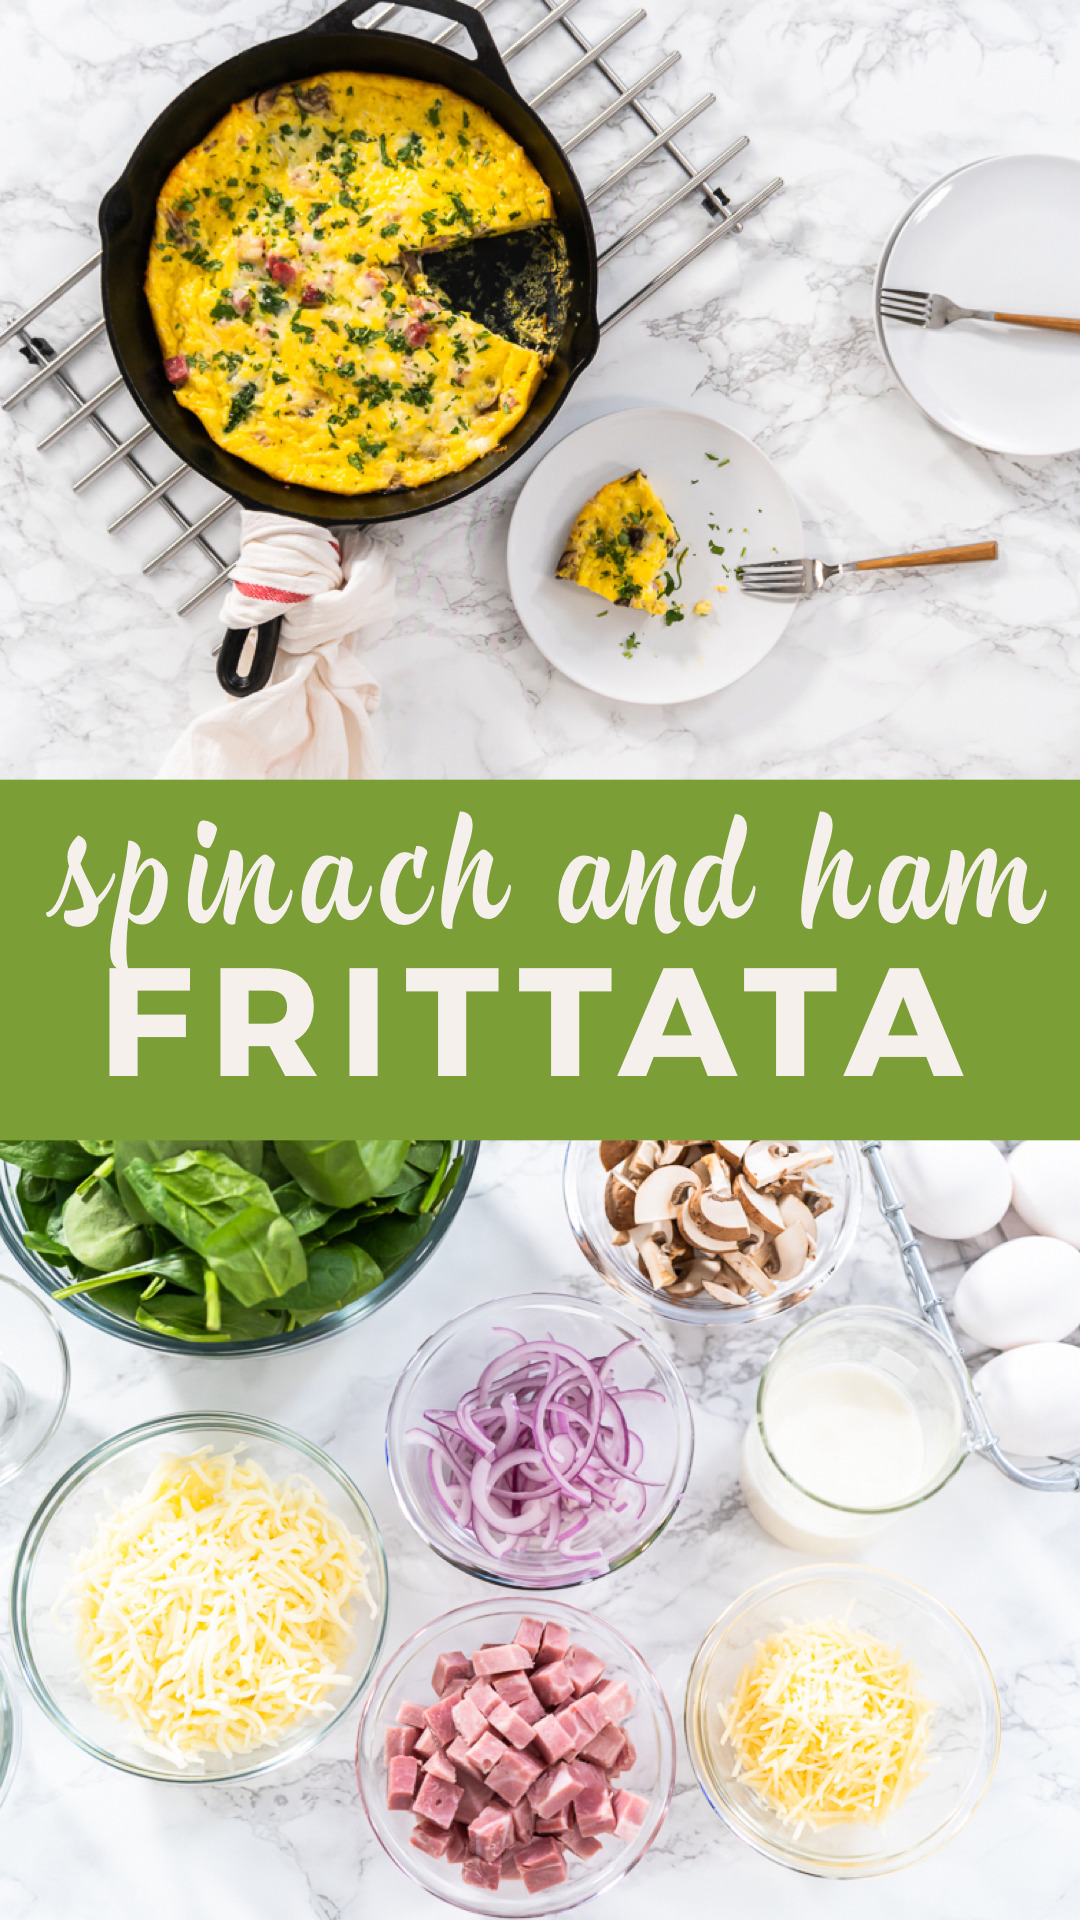 Spinach and ham frittata